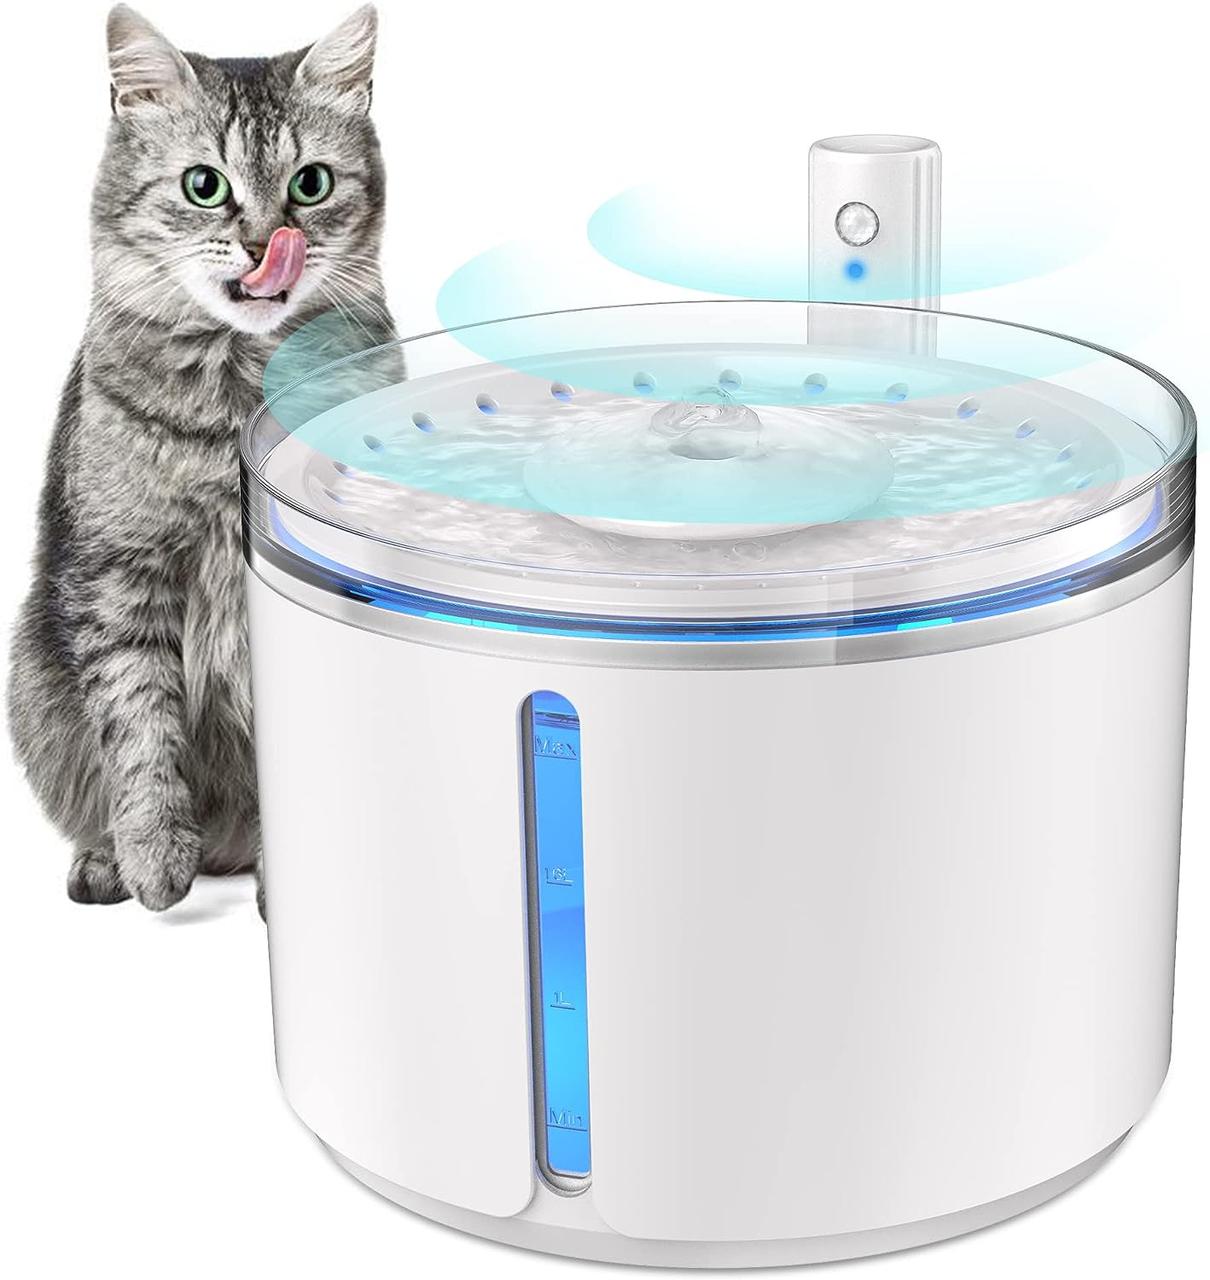 DOGNESS Wireless Cat Water Fountain, автоматичний дозатор води для хатніх тварин, Amazon, Німеччина